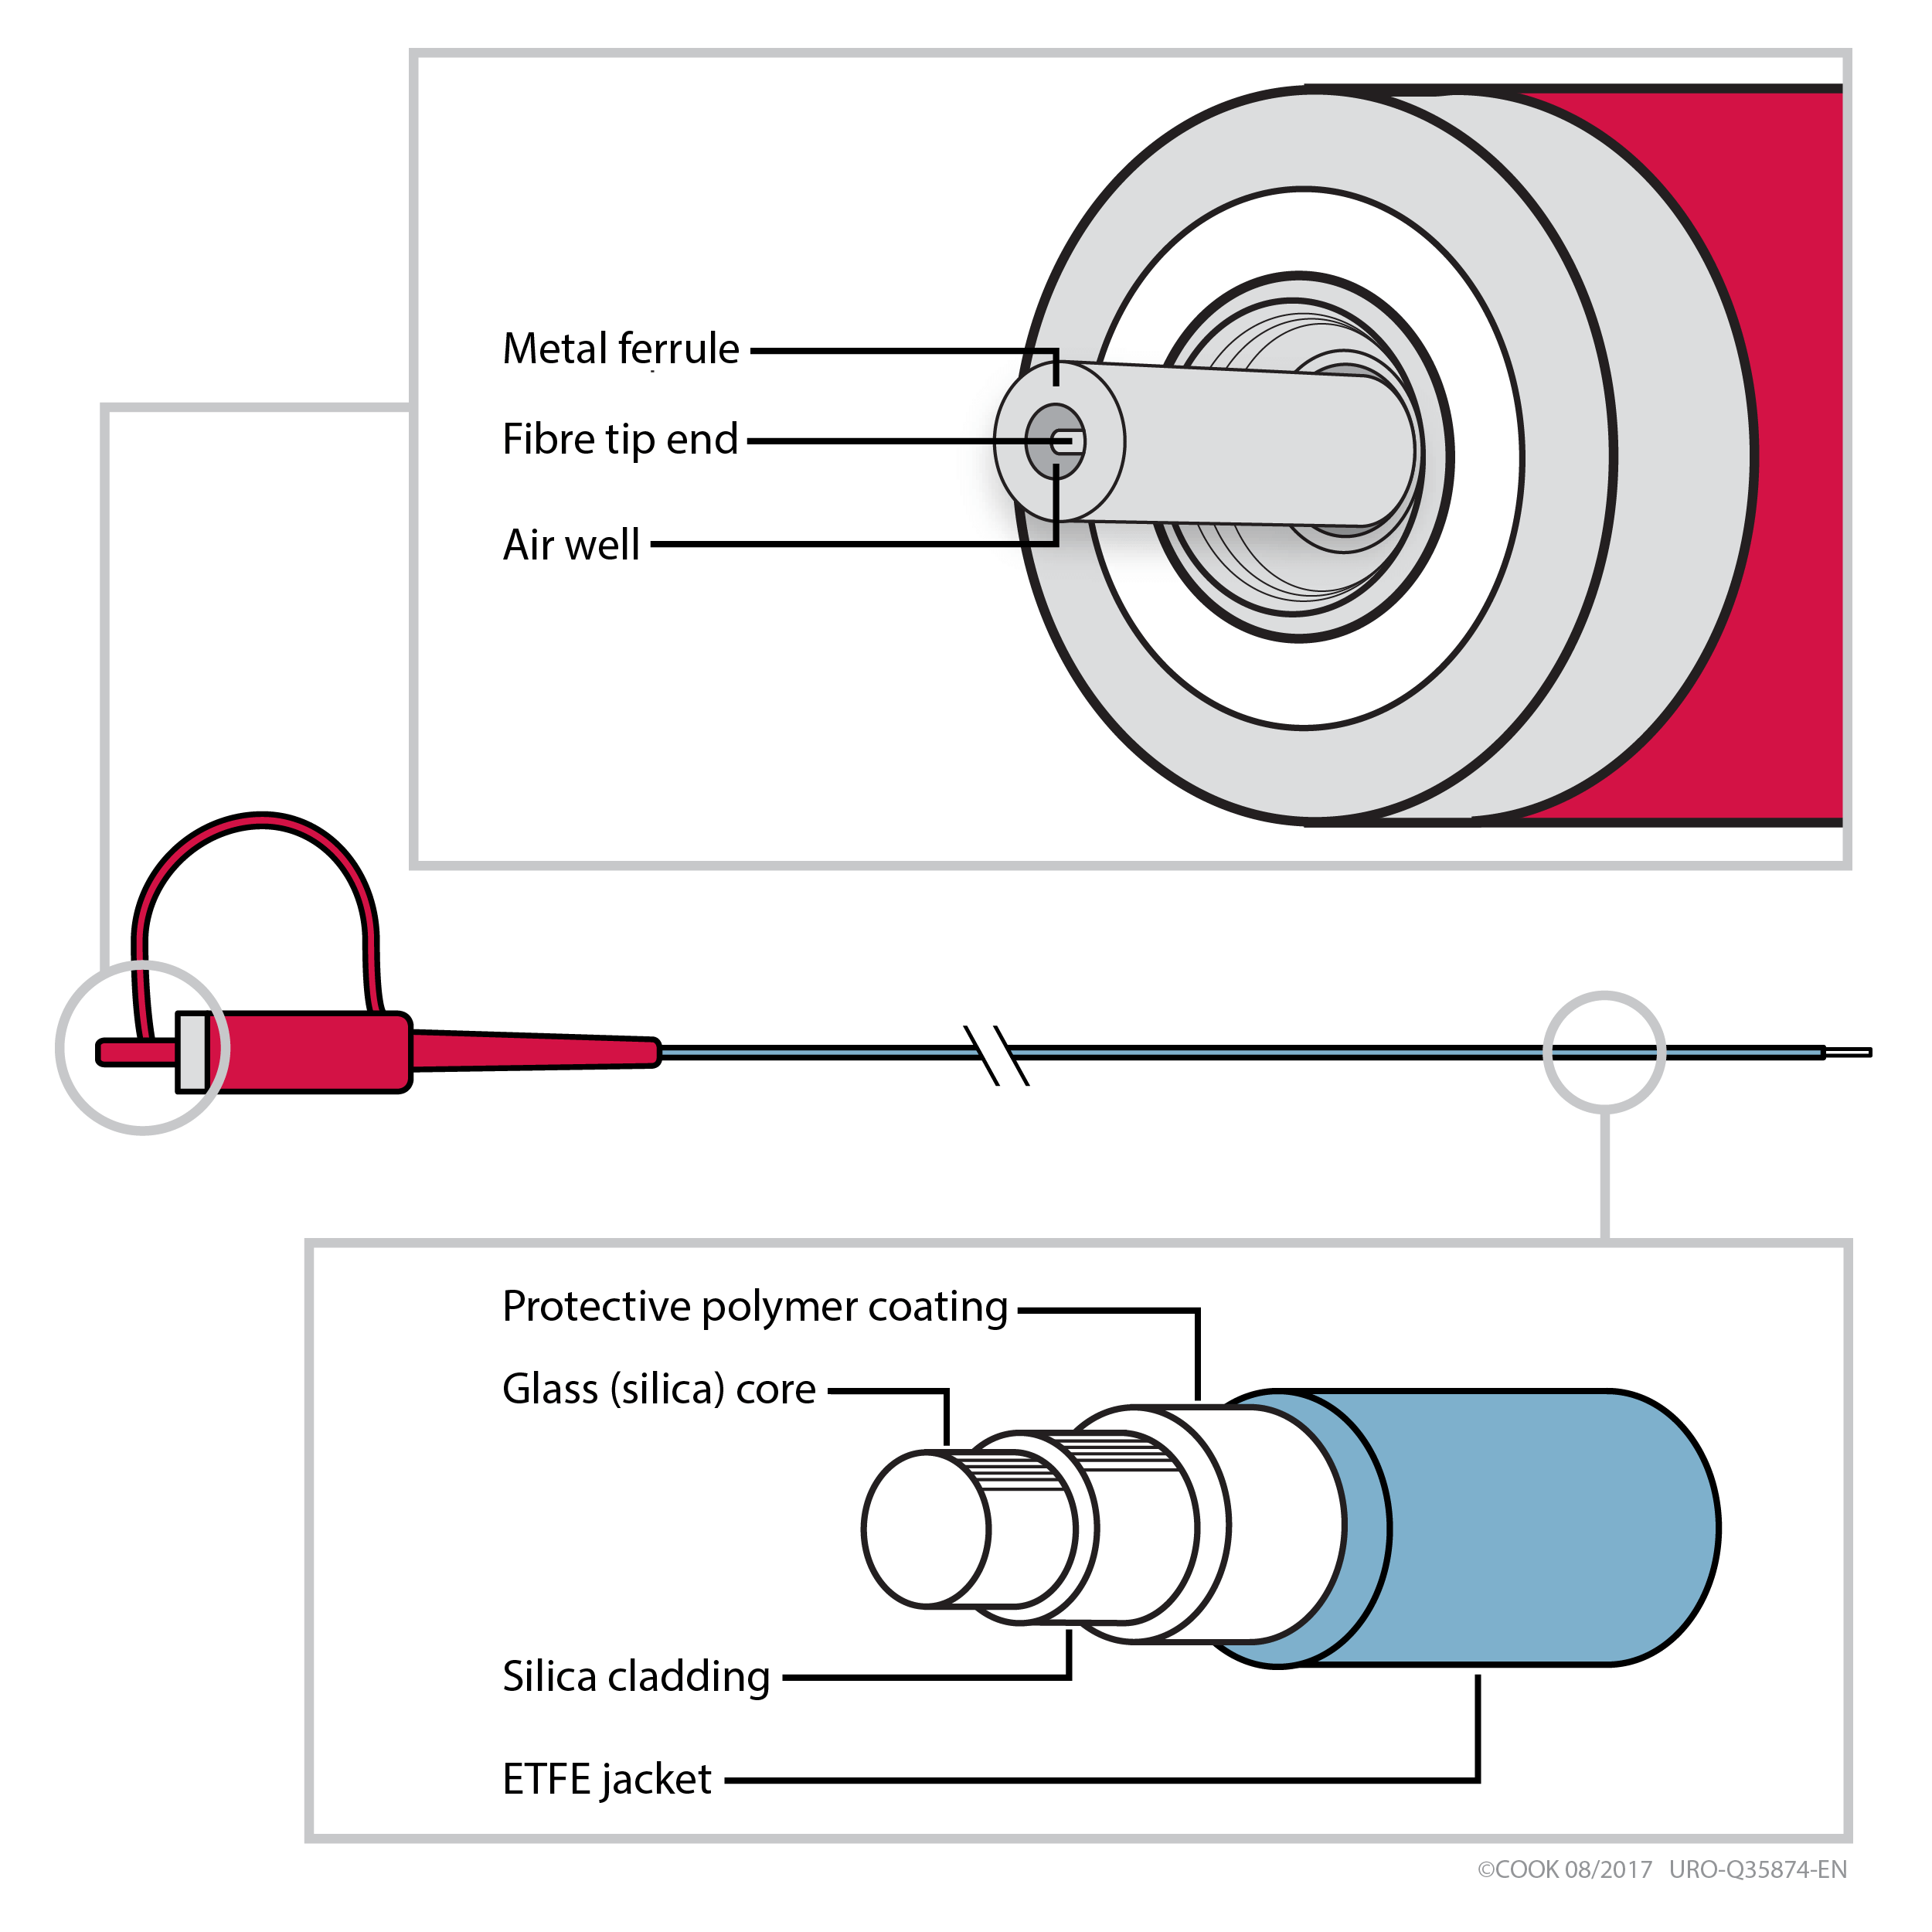 Anatomy of a laser fibre